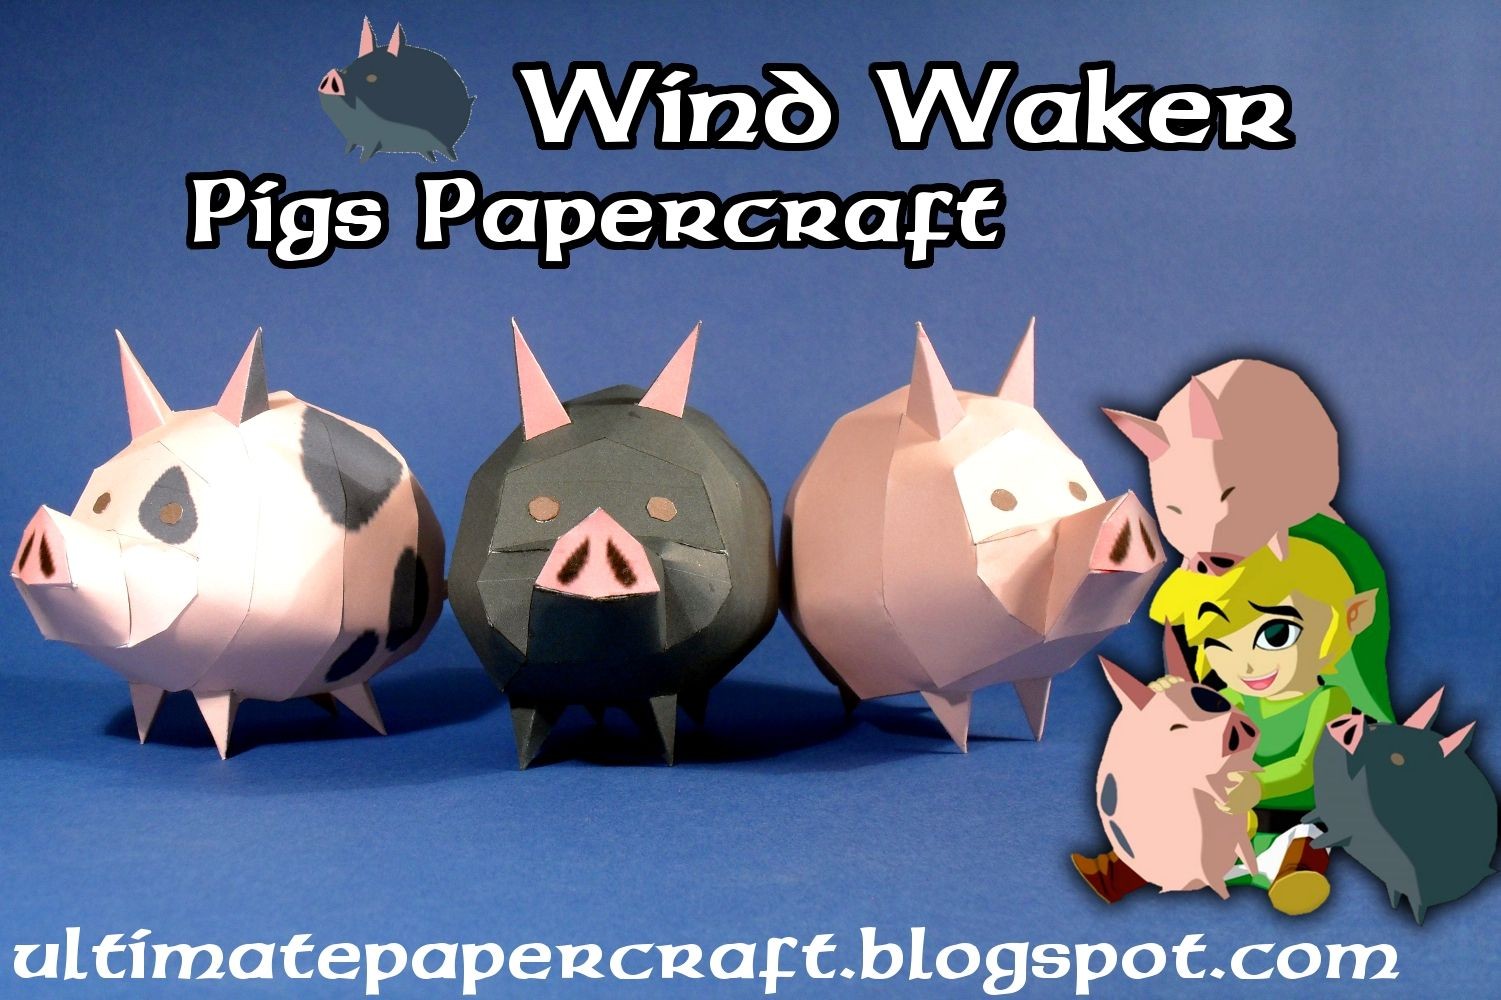 Papercraft Pig Wind Waker Pigs Ultimate Papercraft Paper Craft